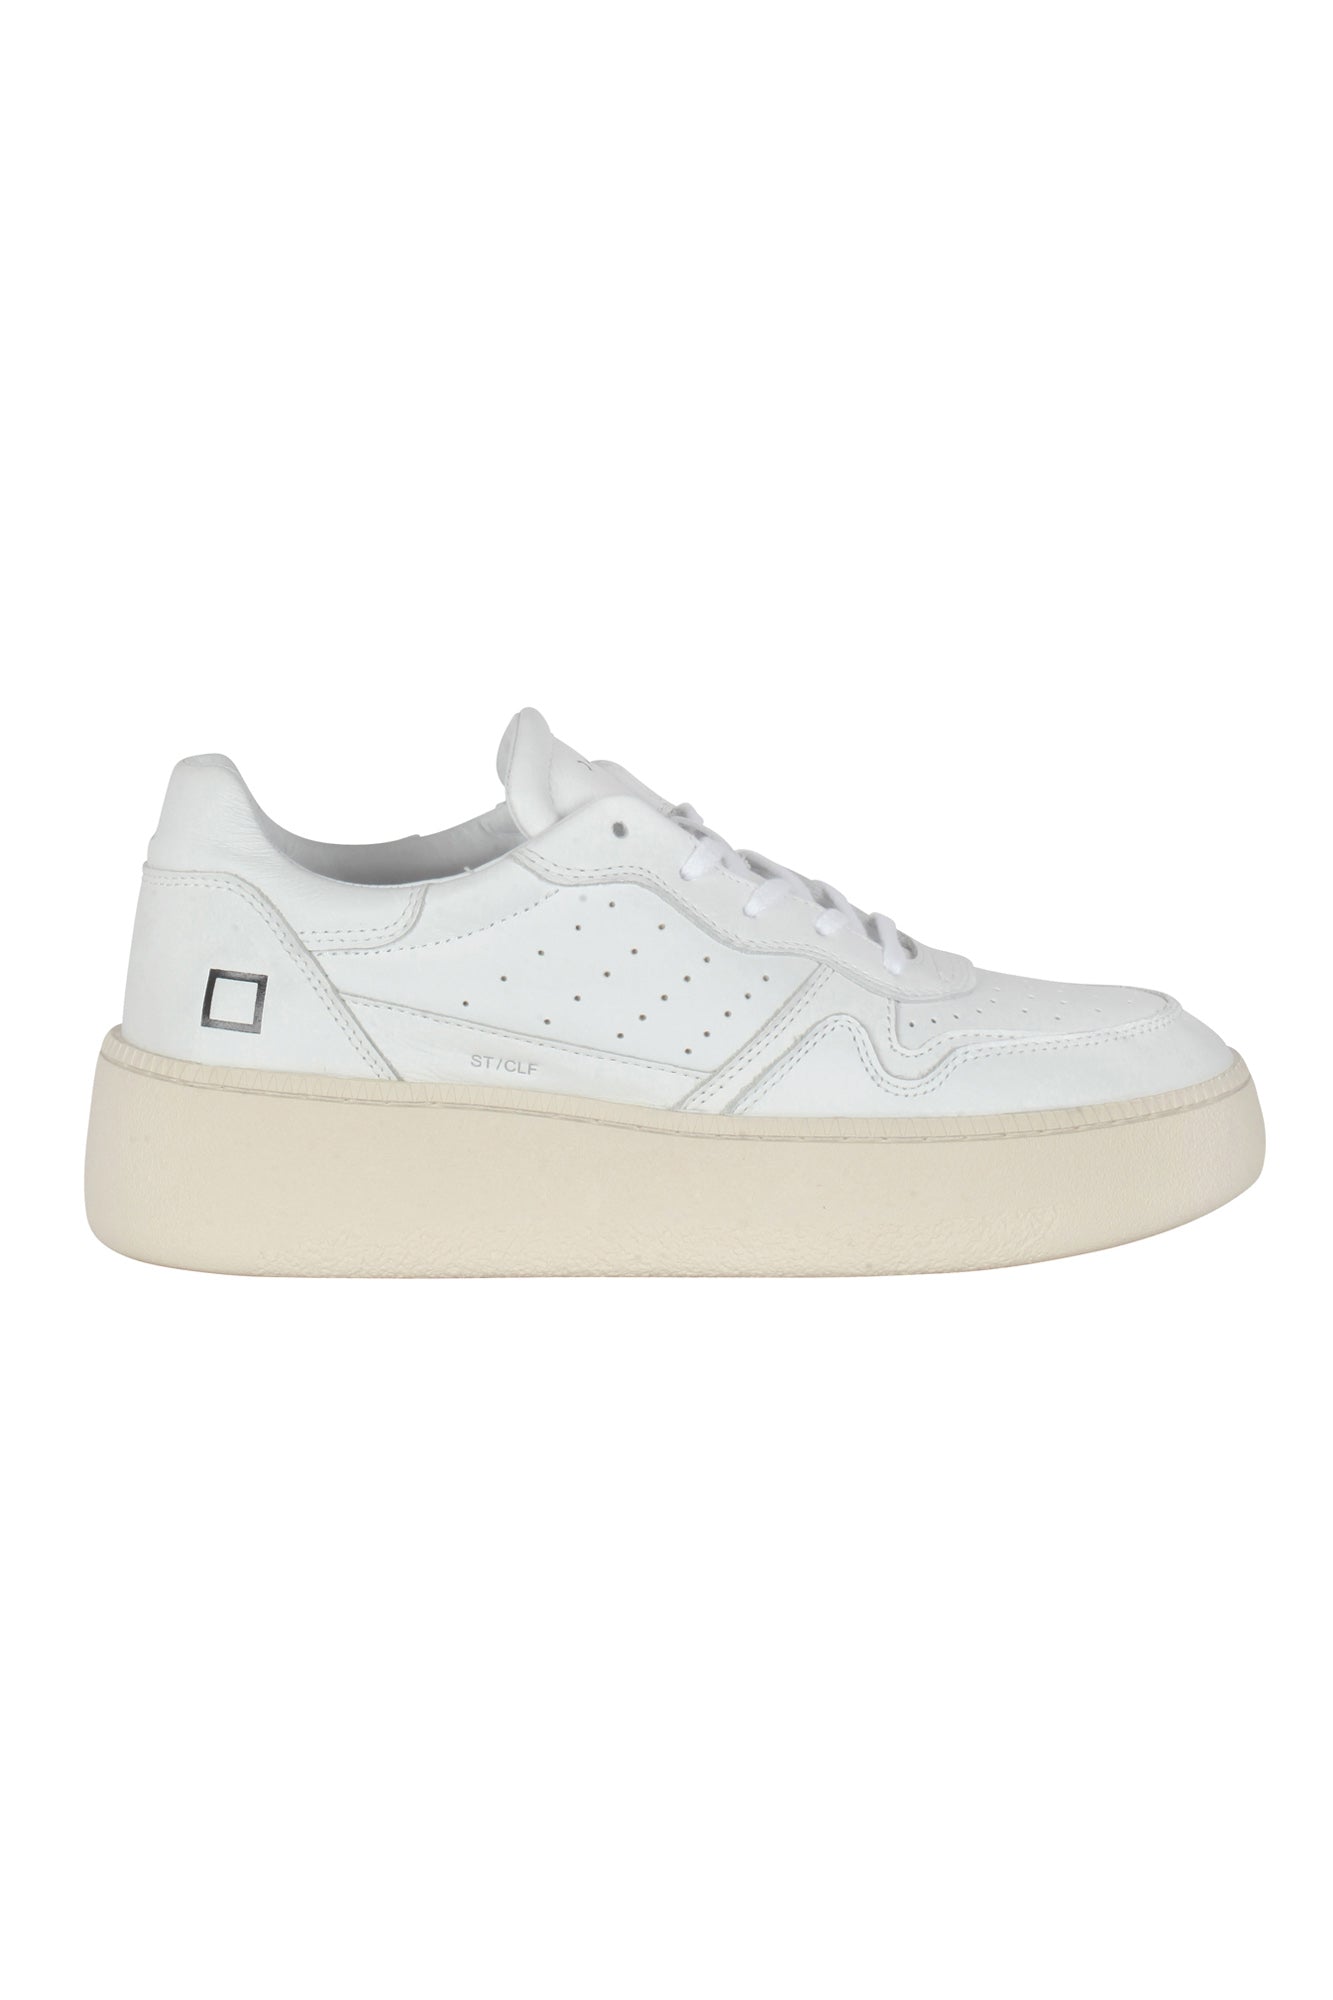 DATE - Sneakers - 430247 - Bianco